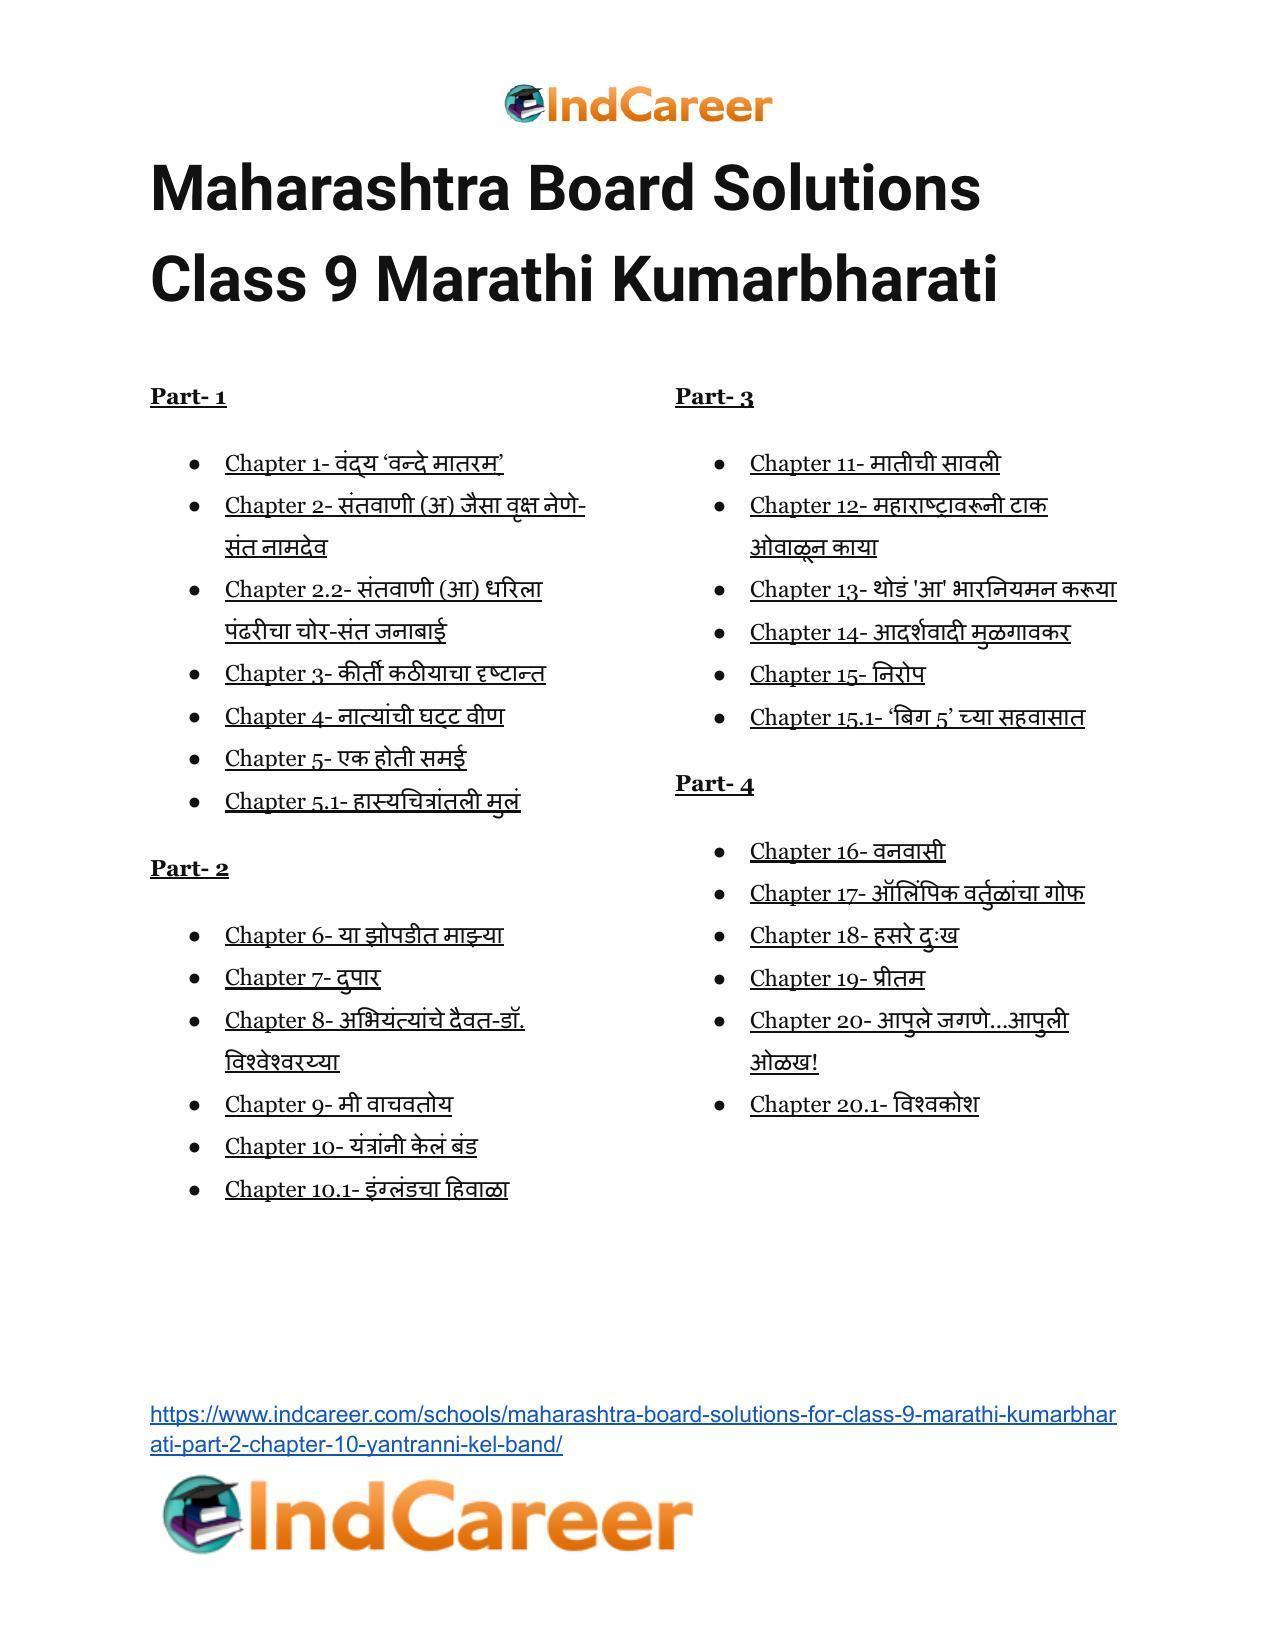 Maharashtra Board Solutions for Class 9- Marathi Kumarbharati (Part- 2): Chapter 10- यंत्रांनी केलं बंड - Page 29